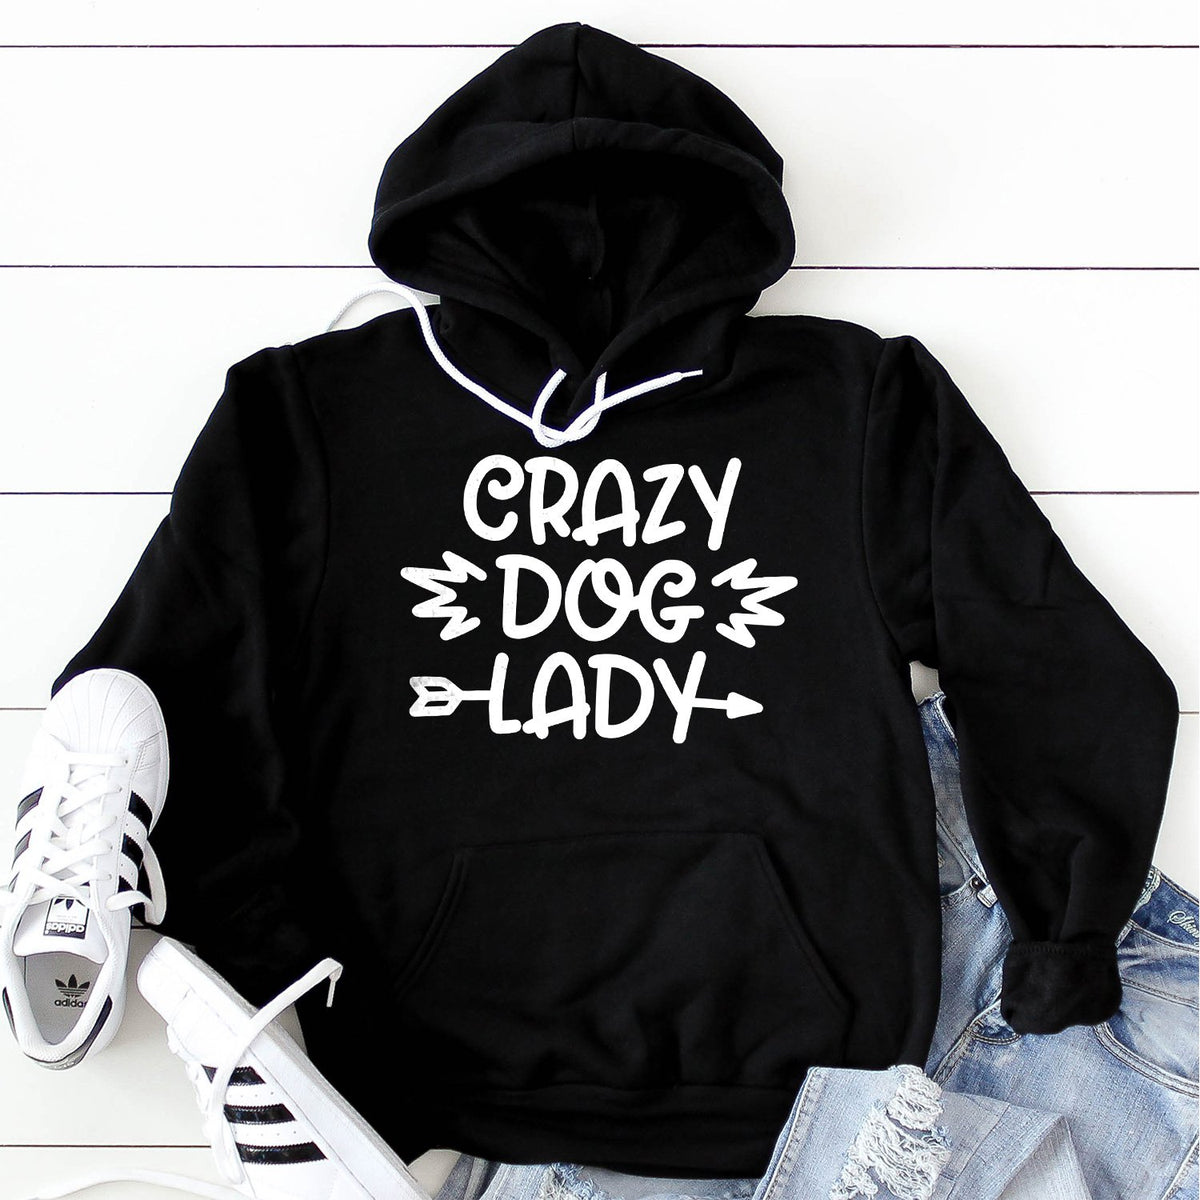 Crazy Dog Lady - Hoodie Sweatshirt